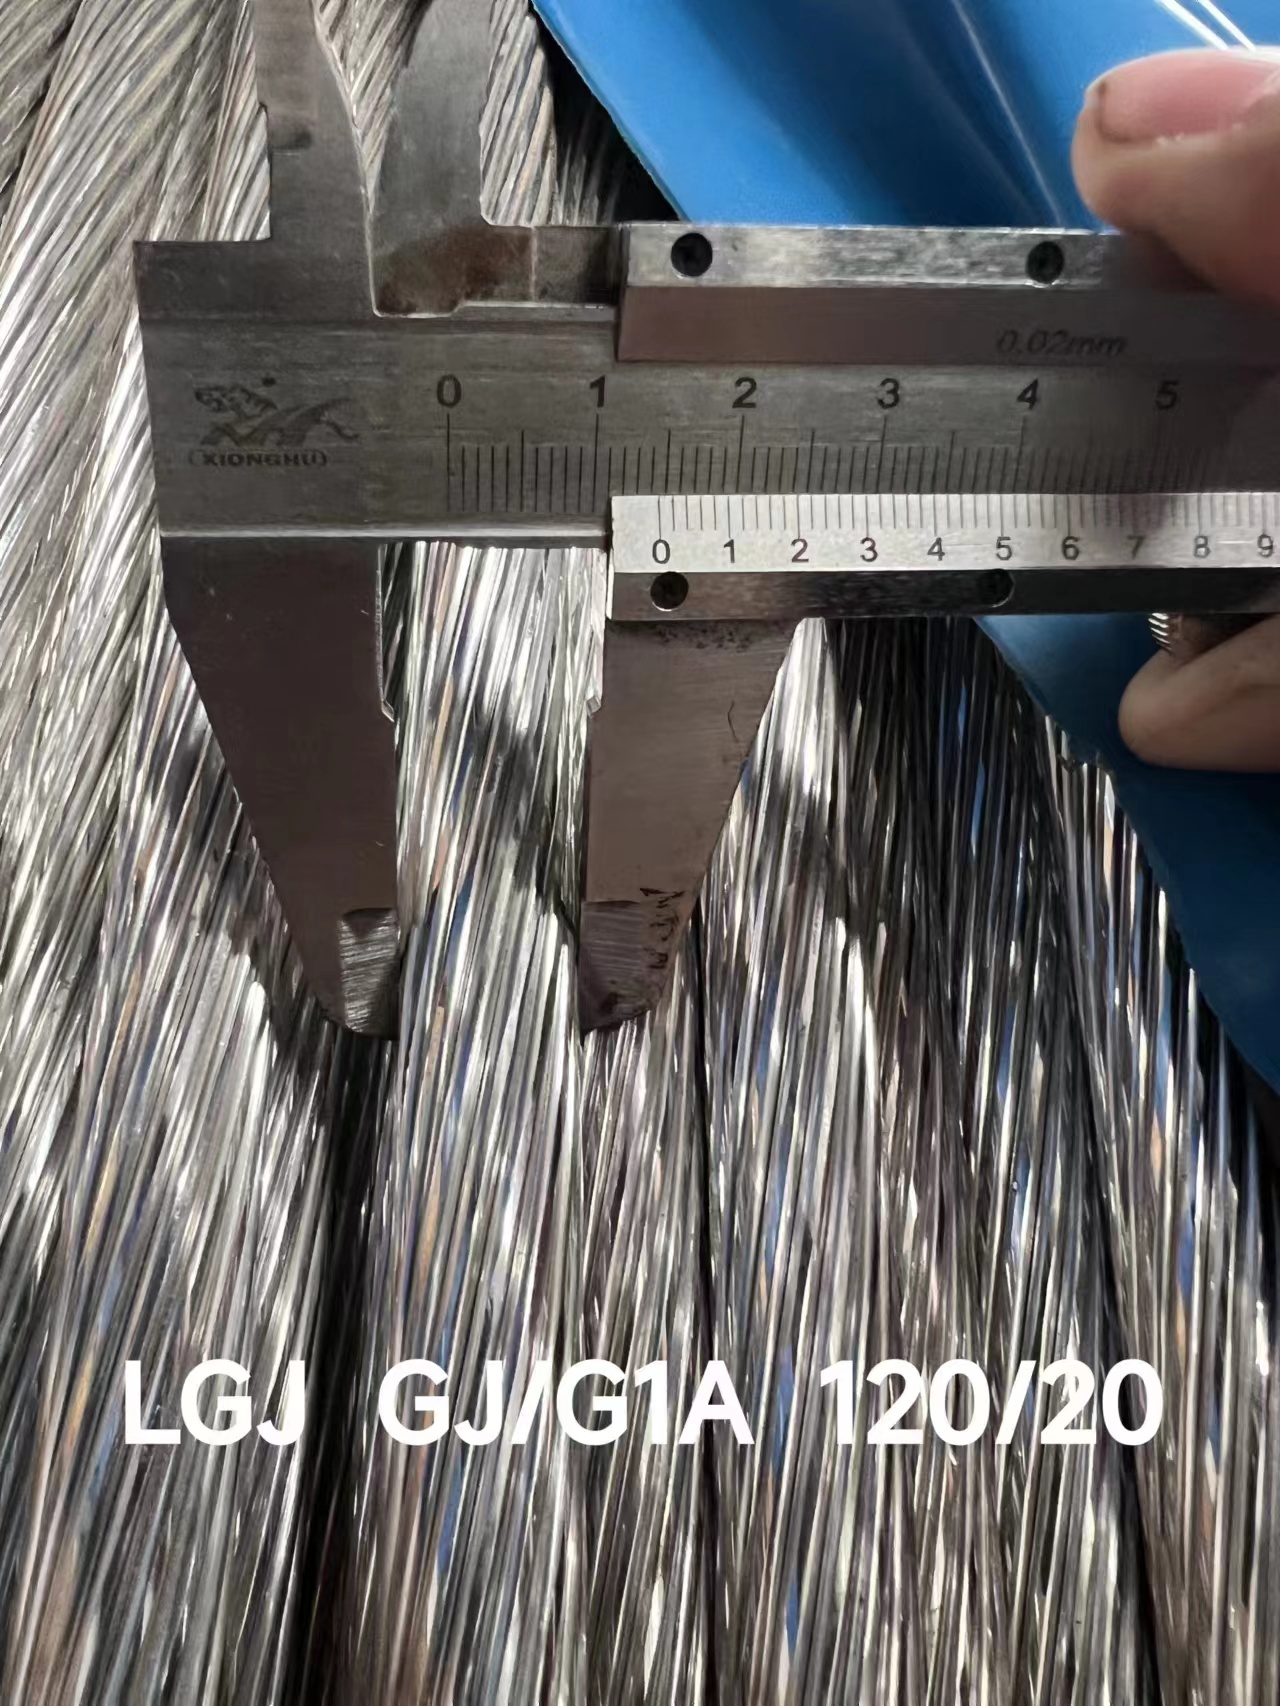 广星LGJ GJ /G1A 120/20电力电缆